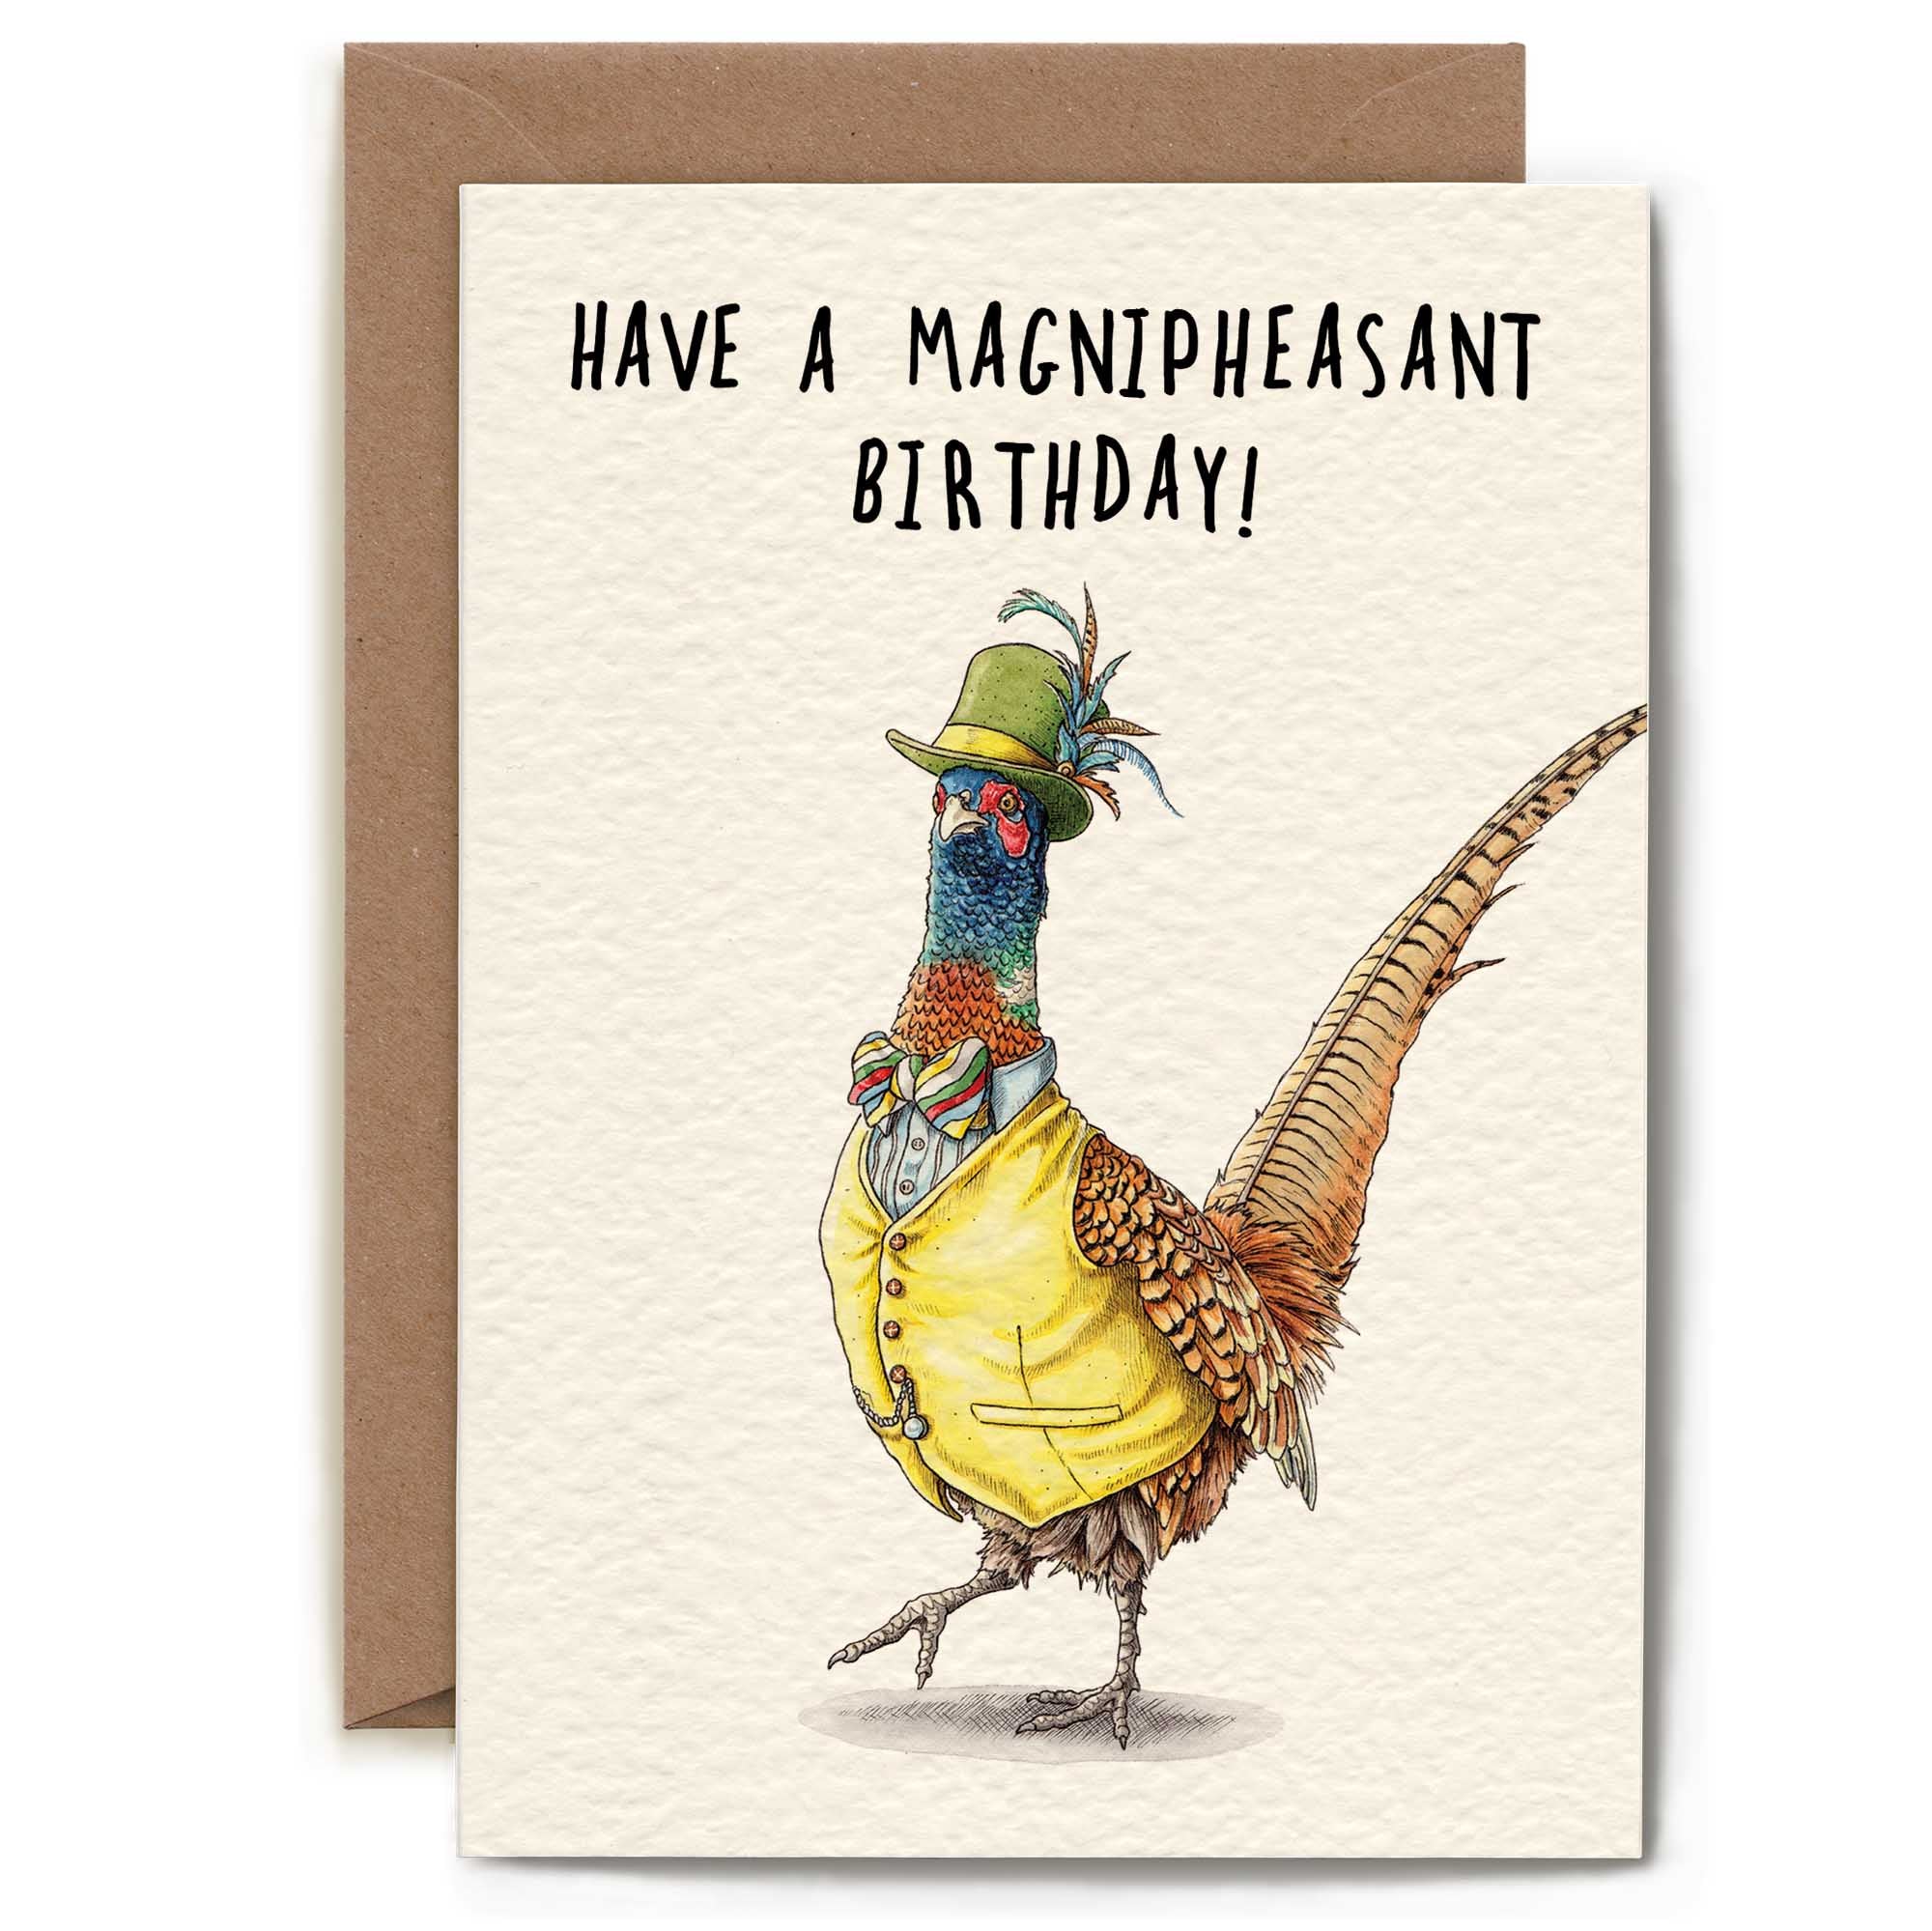 Magnipheasant Birthday Card by Bewilderbeest